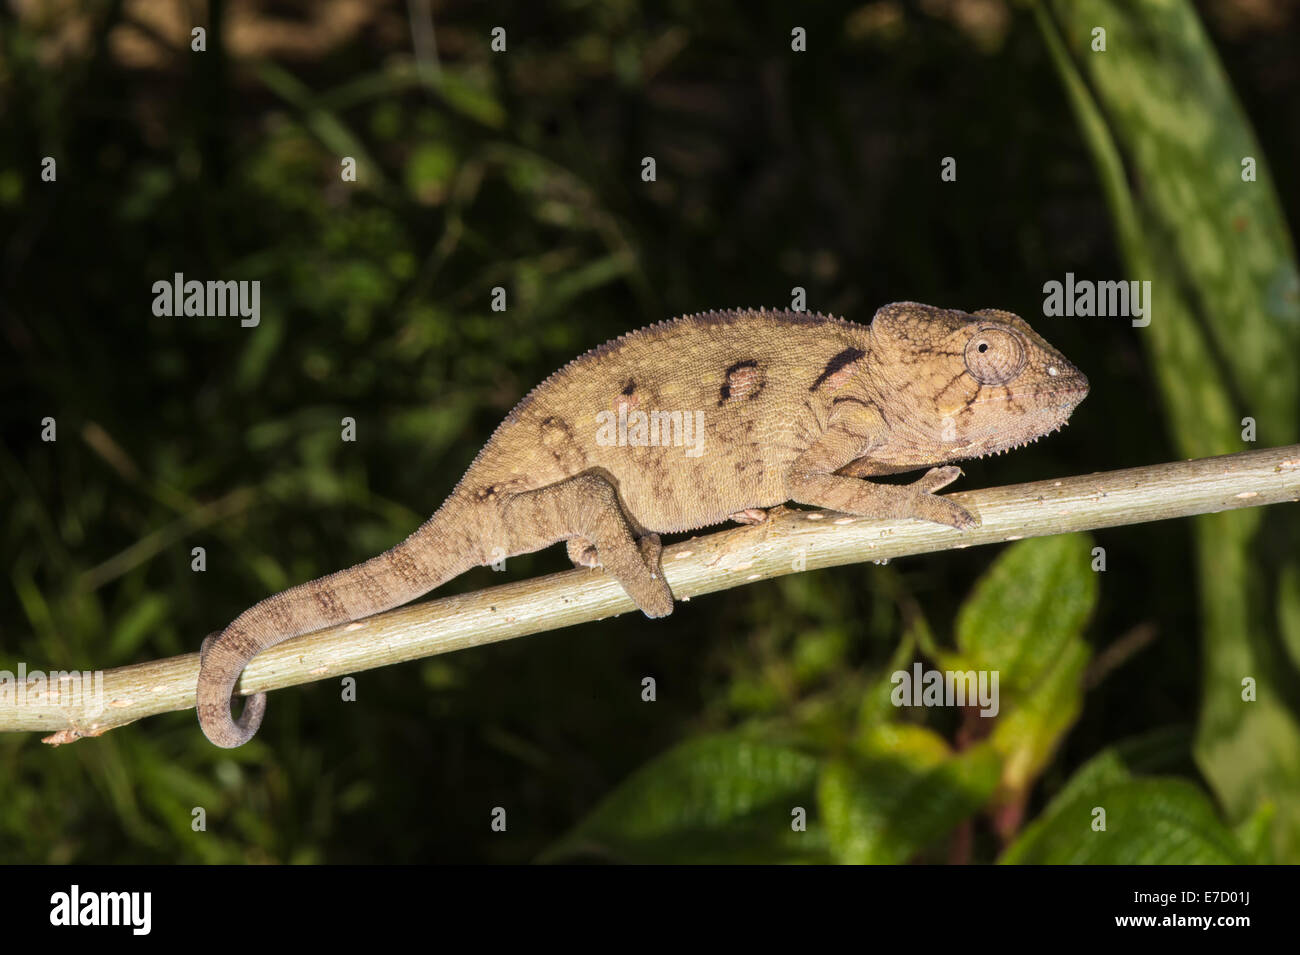 Baby Oustalet's or Malagasy Giant Chameleon (Furcifer oustaleti), Madagascar Stock Photo